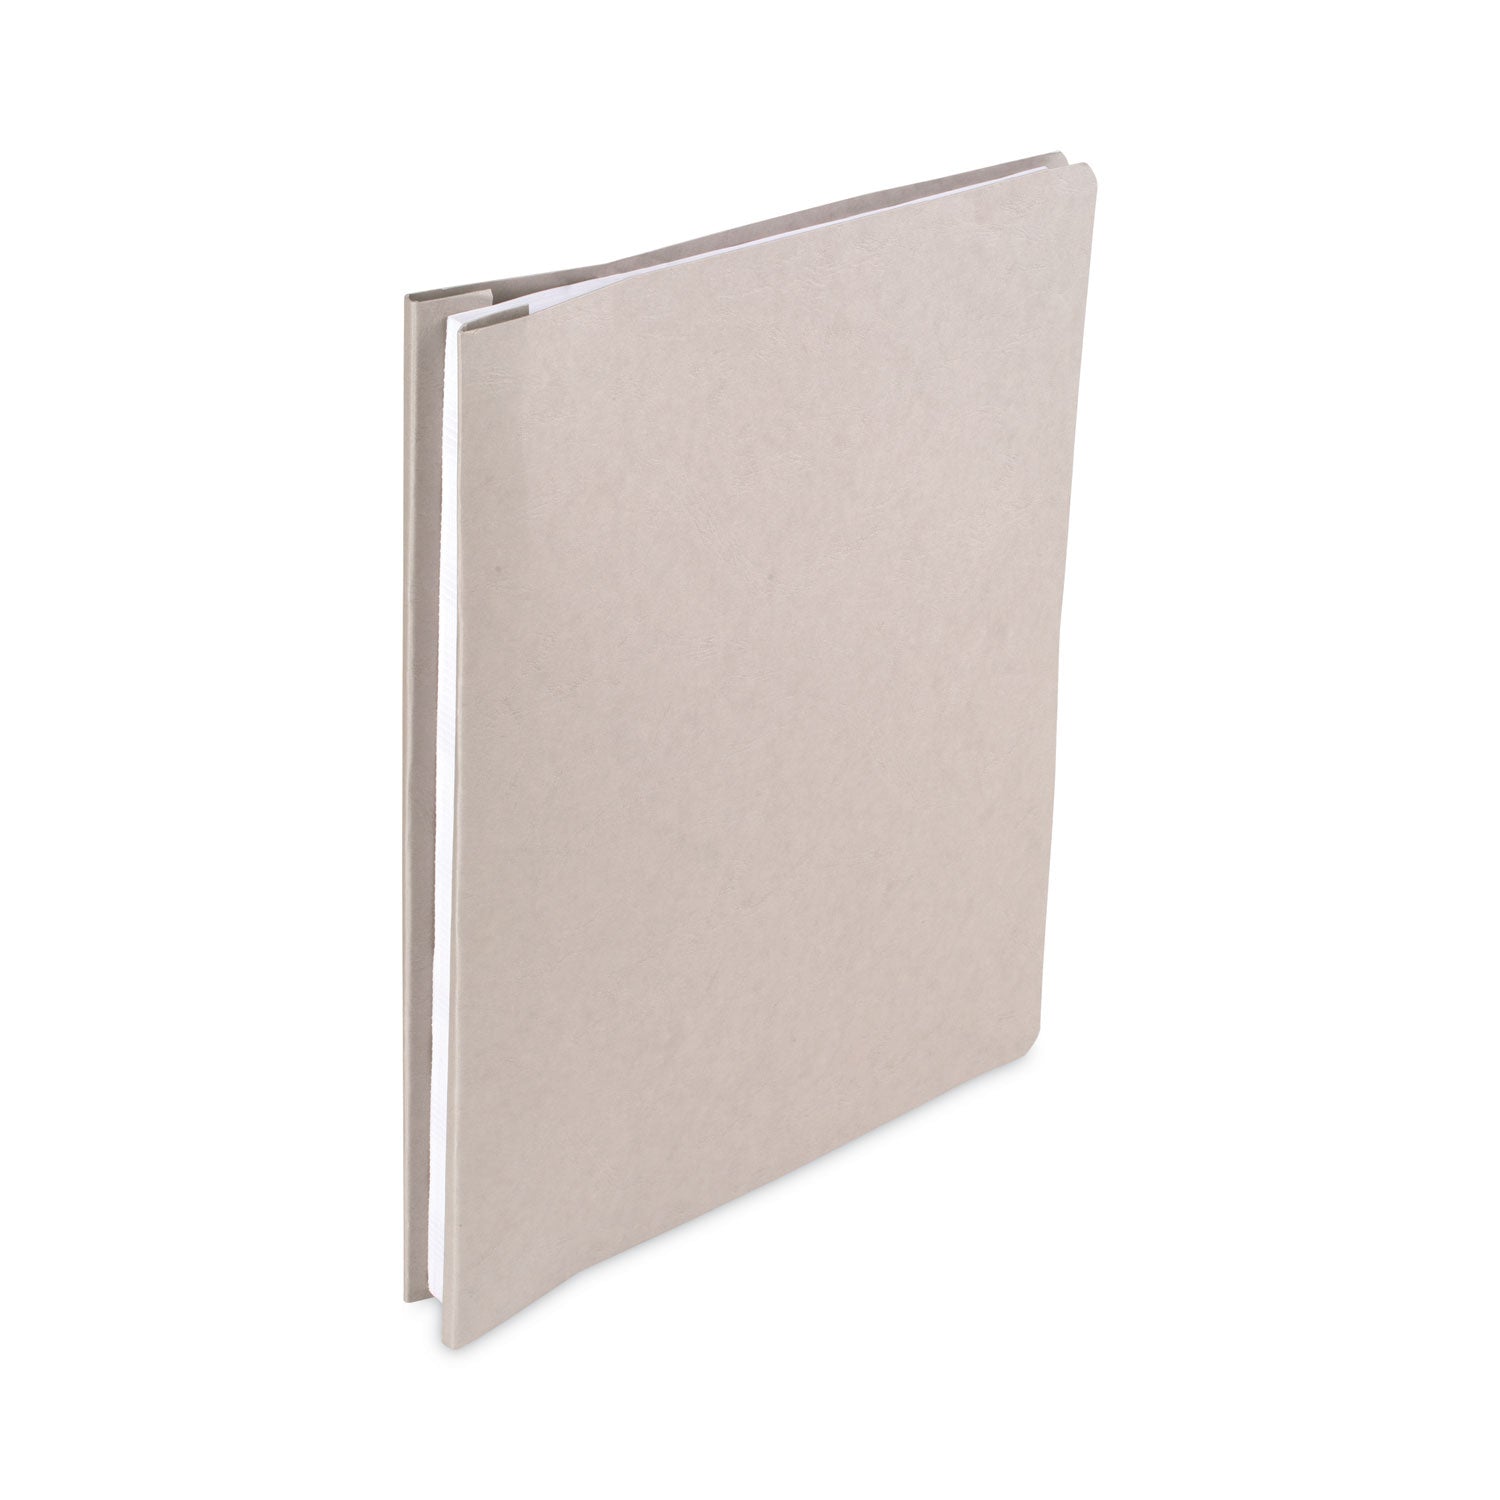 PRESSTEX Covers with Storage Hooks, 2 Posts, 6" Capacity, 14.88 x 11, Light Gray - 